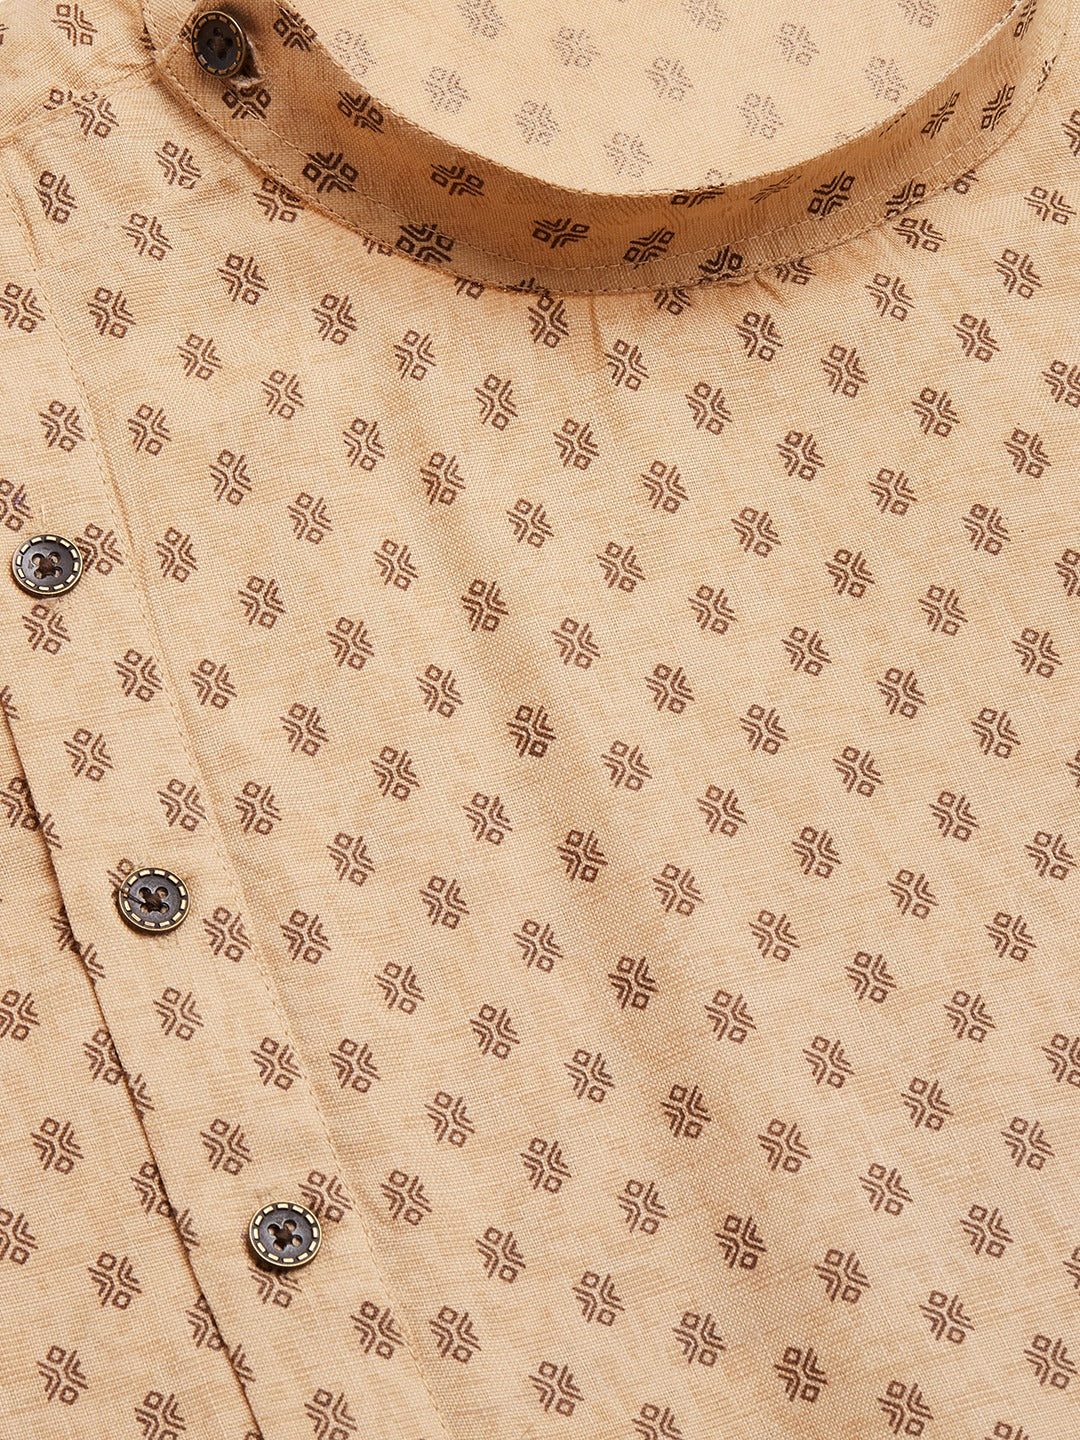 Jompers Men's Beige Cotton printed kurta Pyjama Set